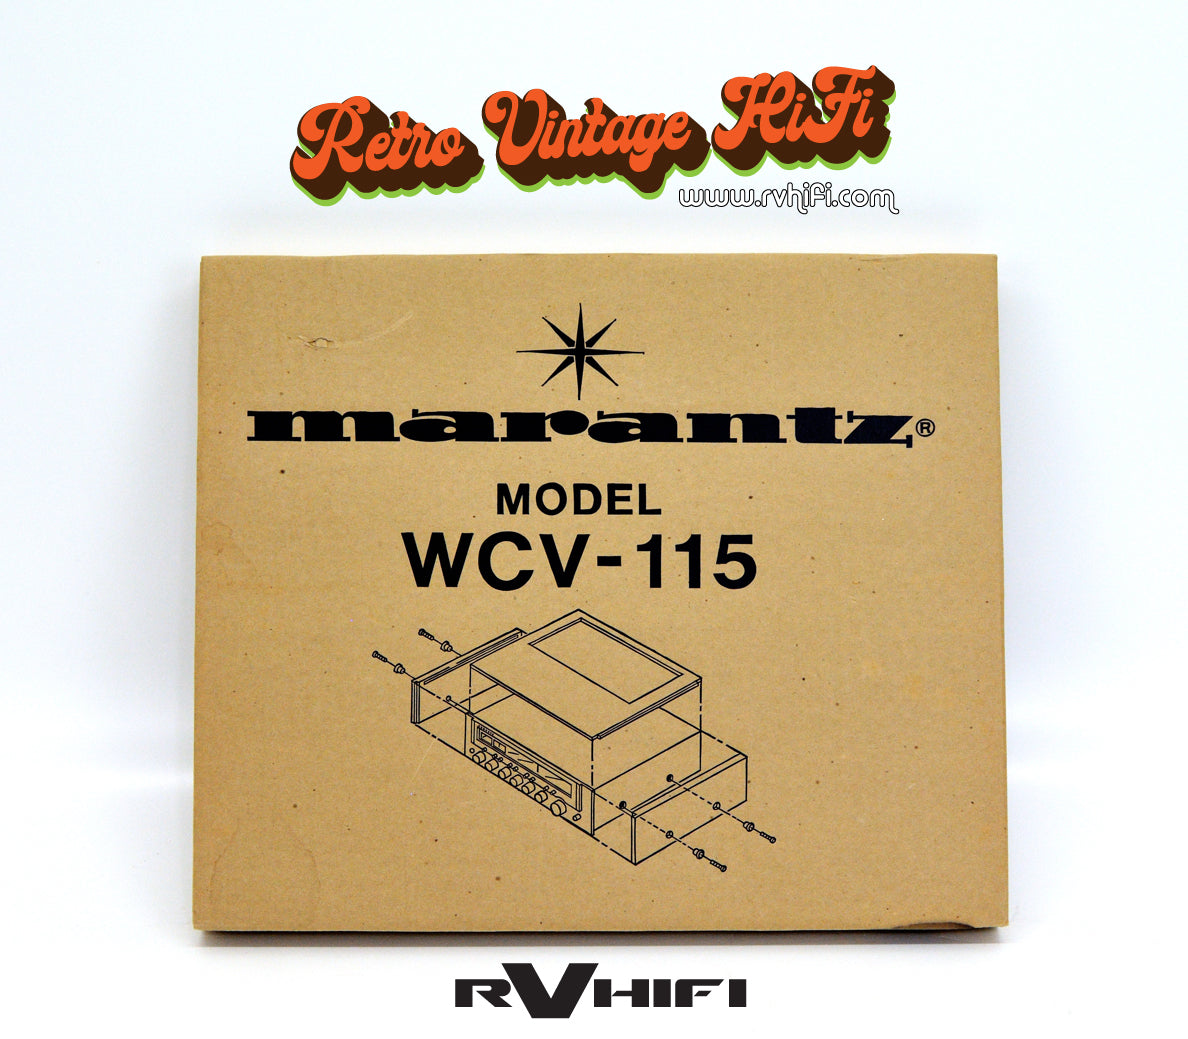 Marantz Model WCV-115 Wood Veneer Case Vintage Audio RV HI FI